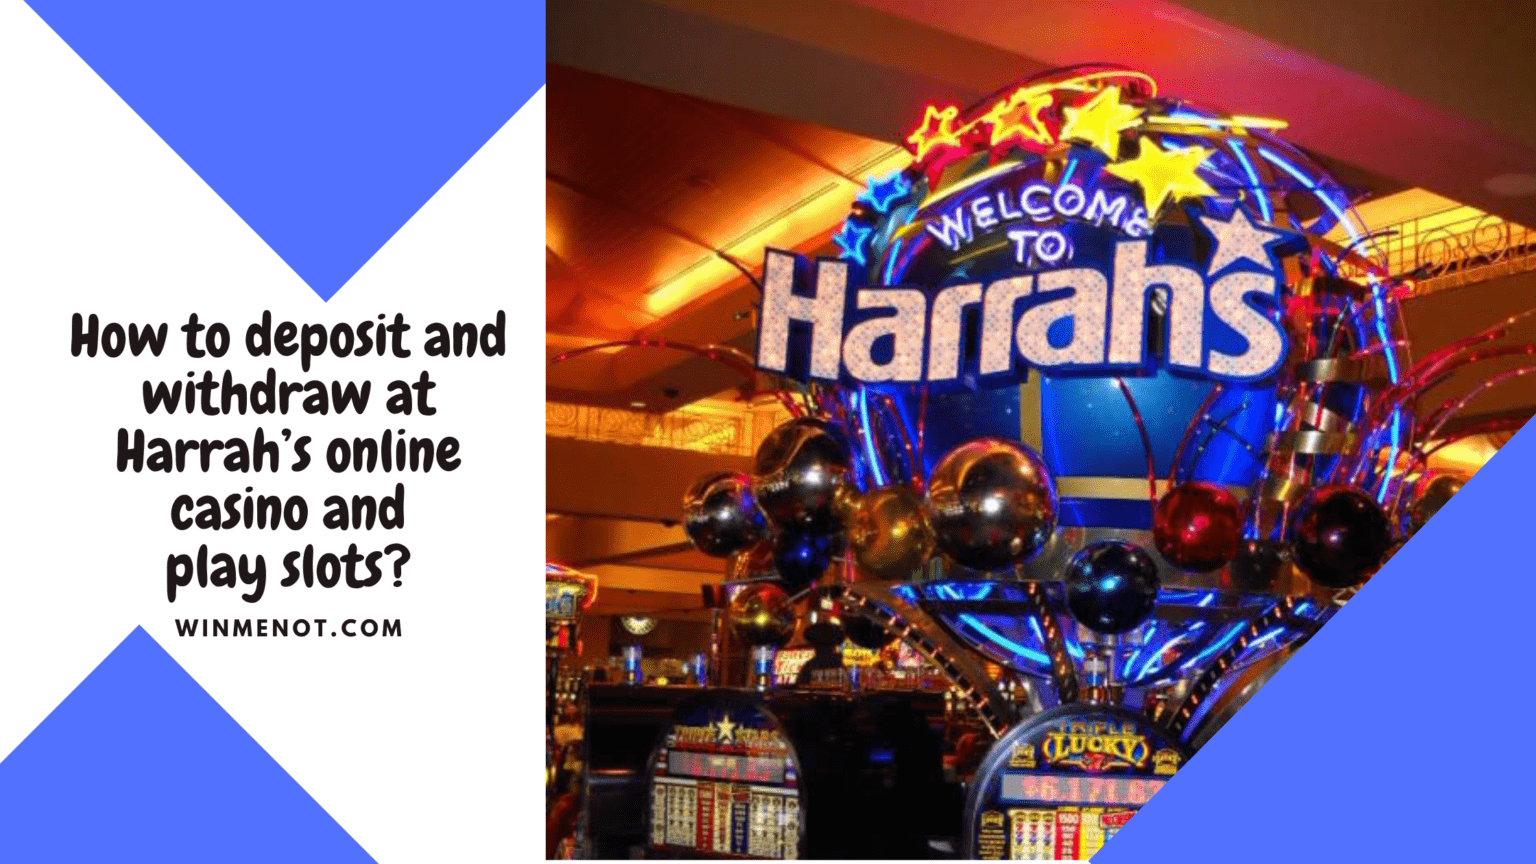 pala online casino promo code